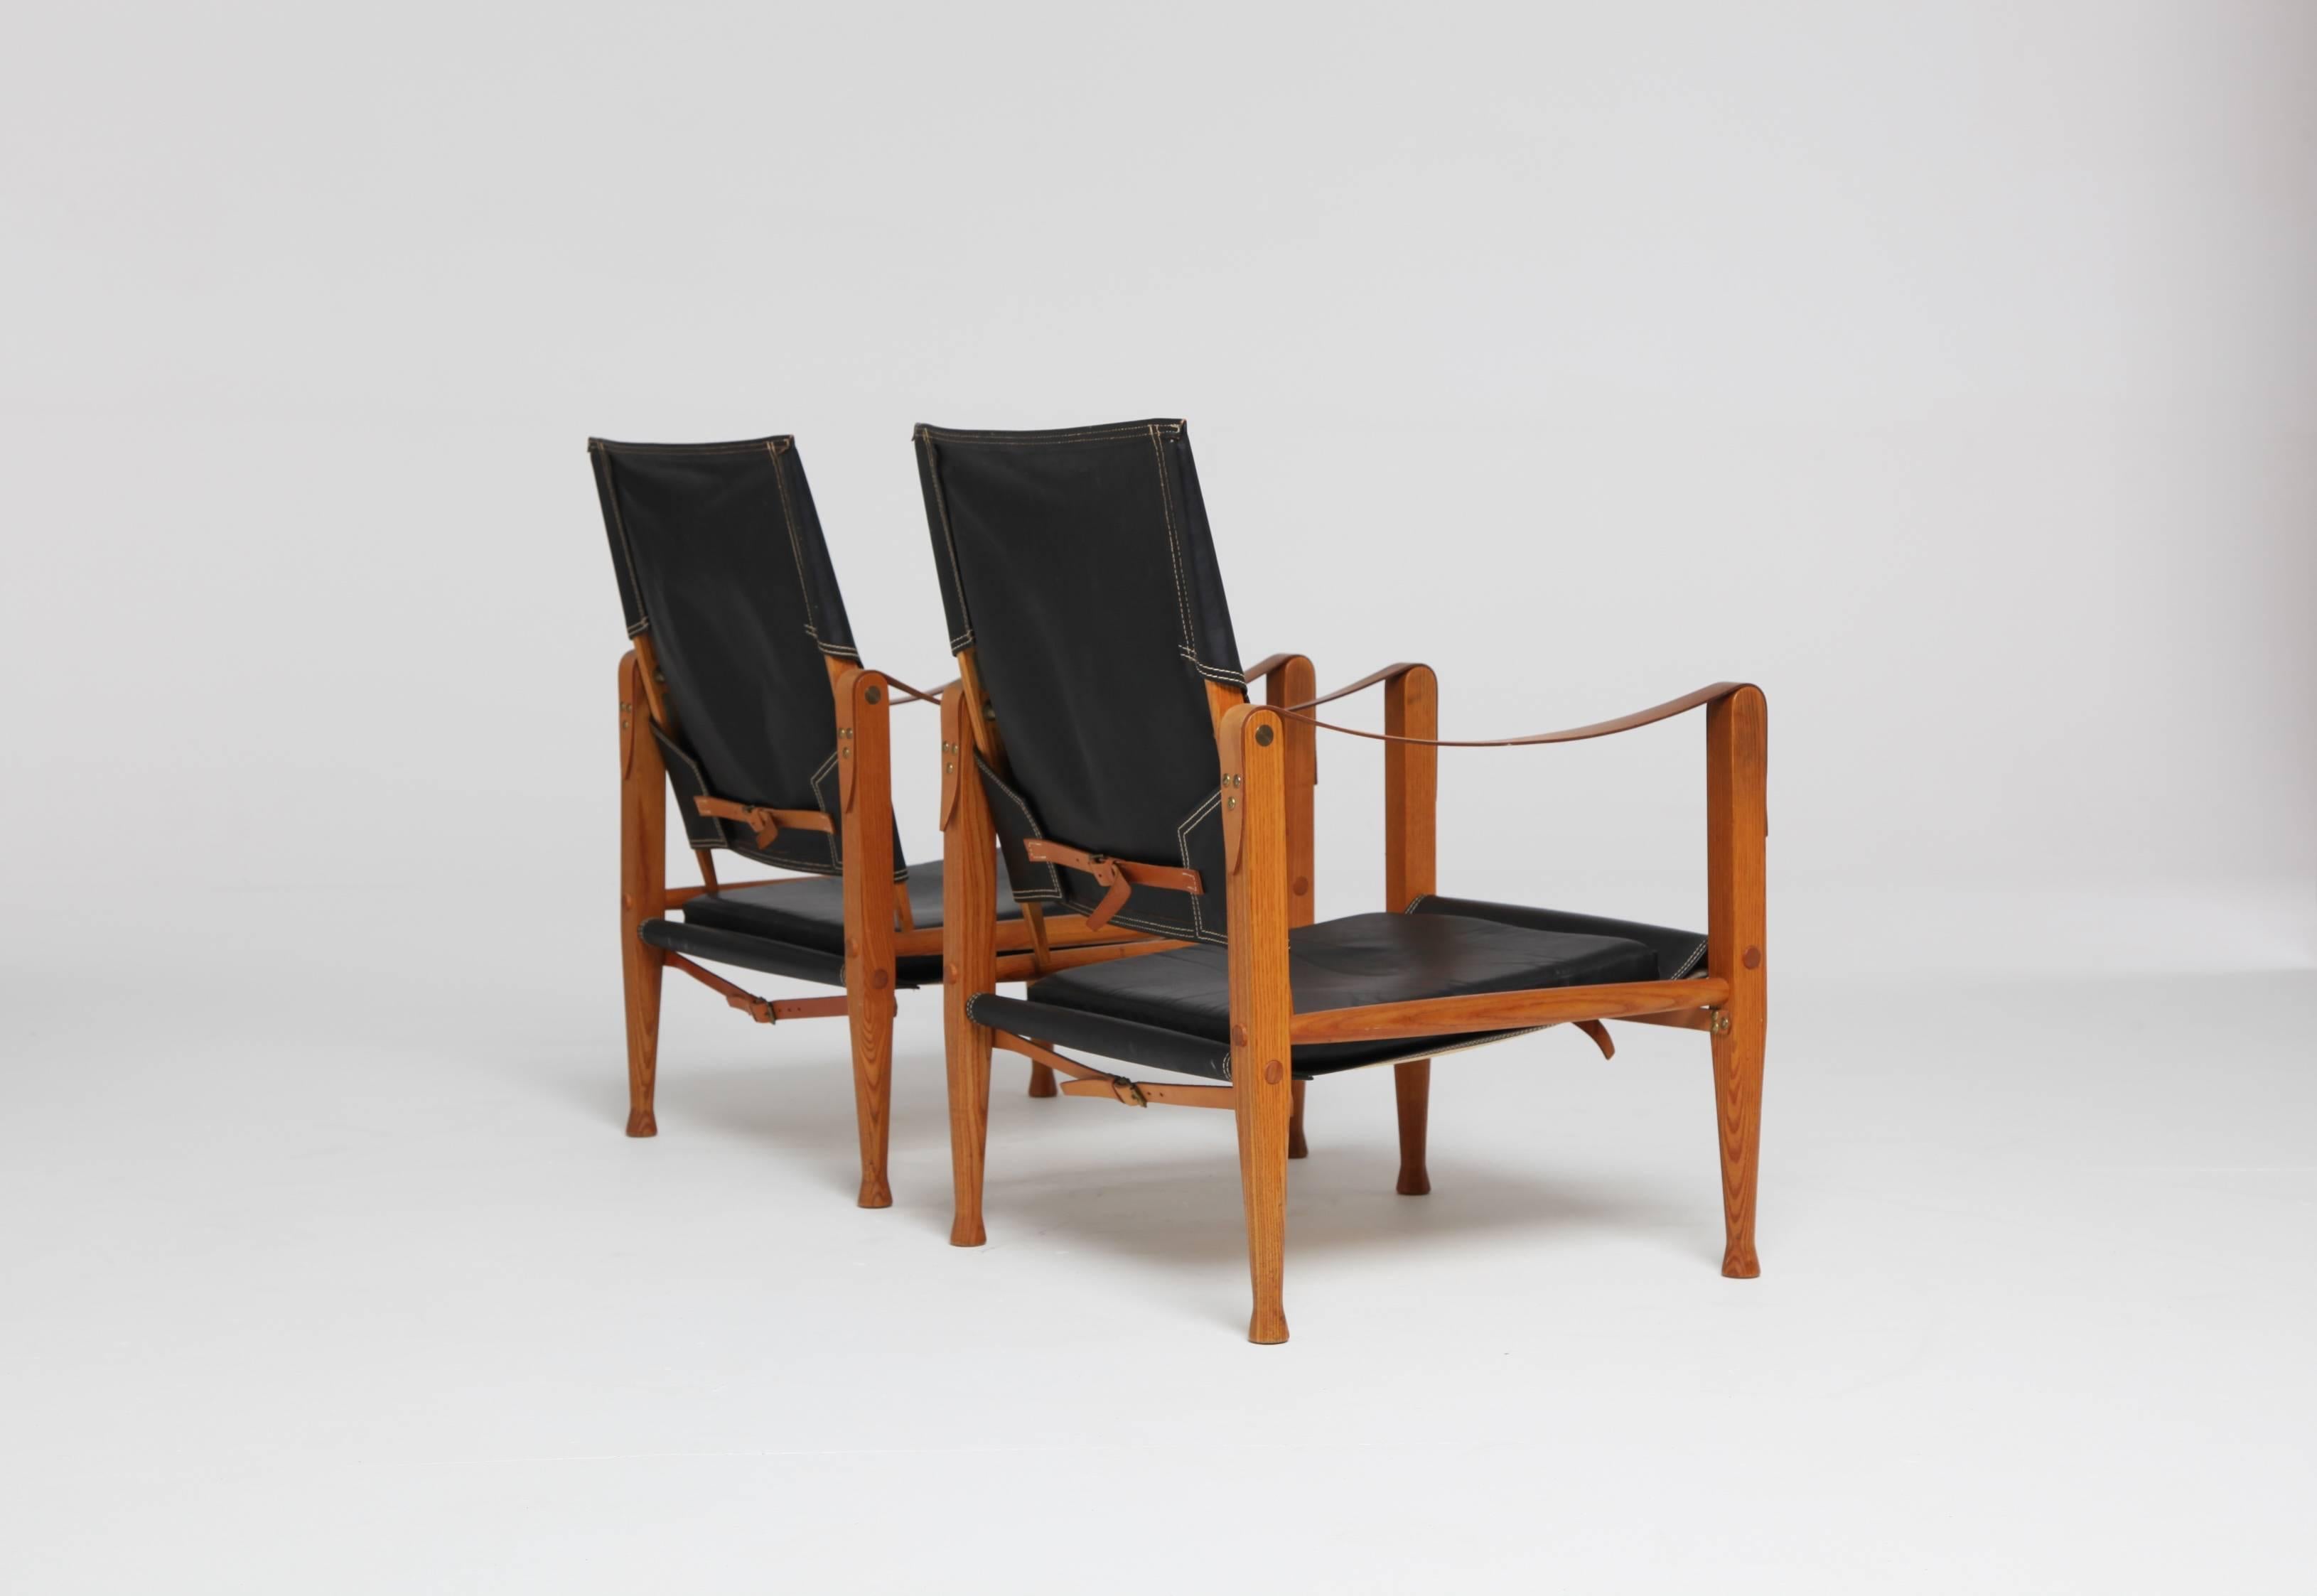 20th Century Pair of Kaare Klint Safari Chairs, Made by Rud Rasmussen, Denmark